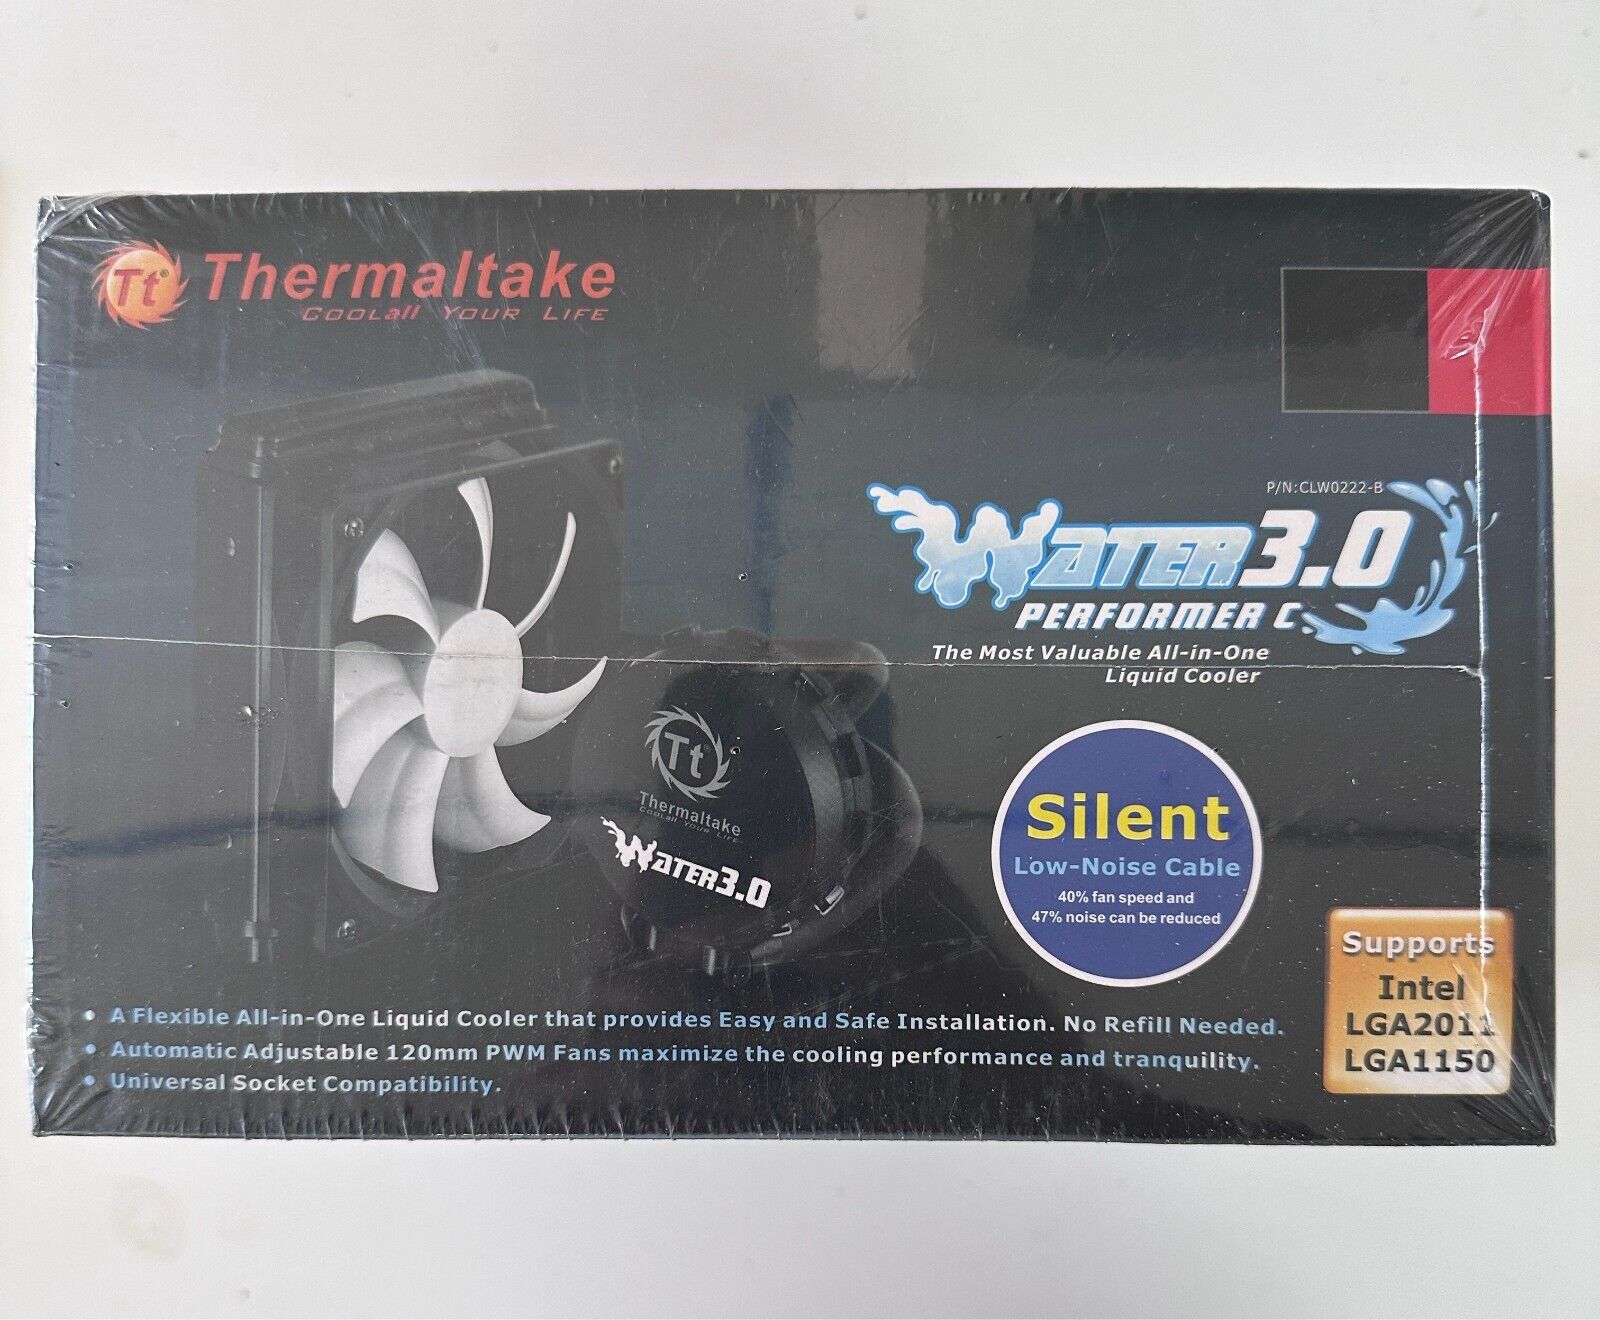 Thermaltake CLW0222-B Water 3.0 Performer C (New Sealed) CPU Cooler